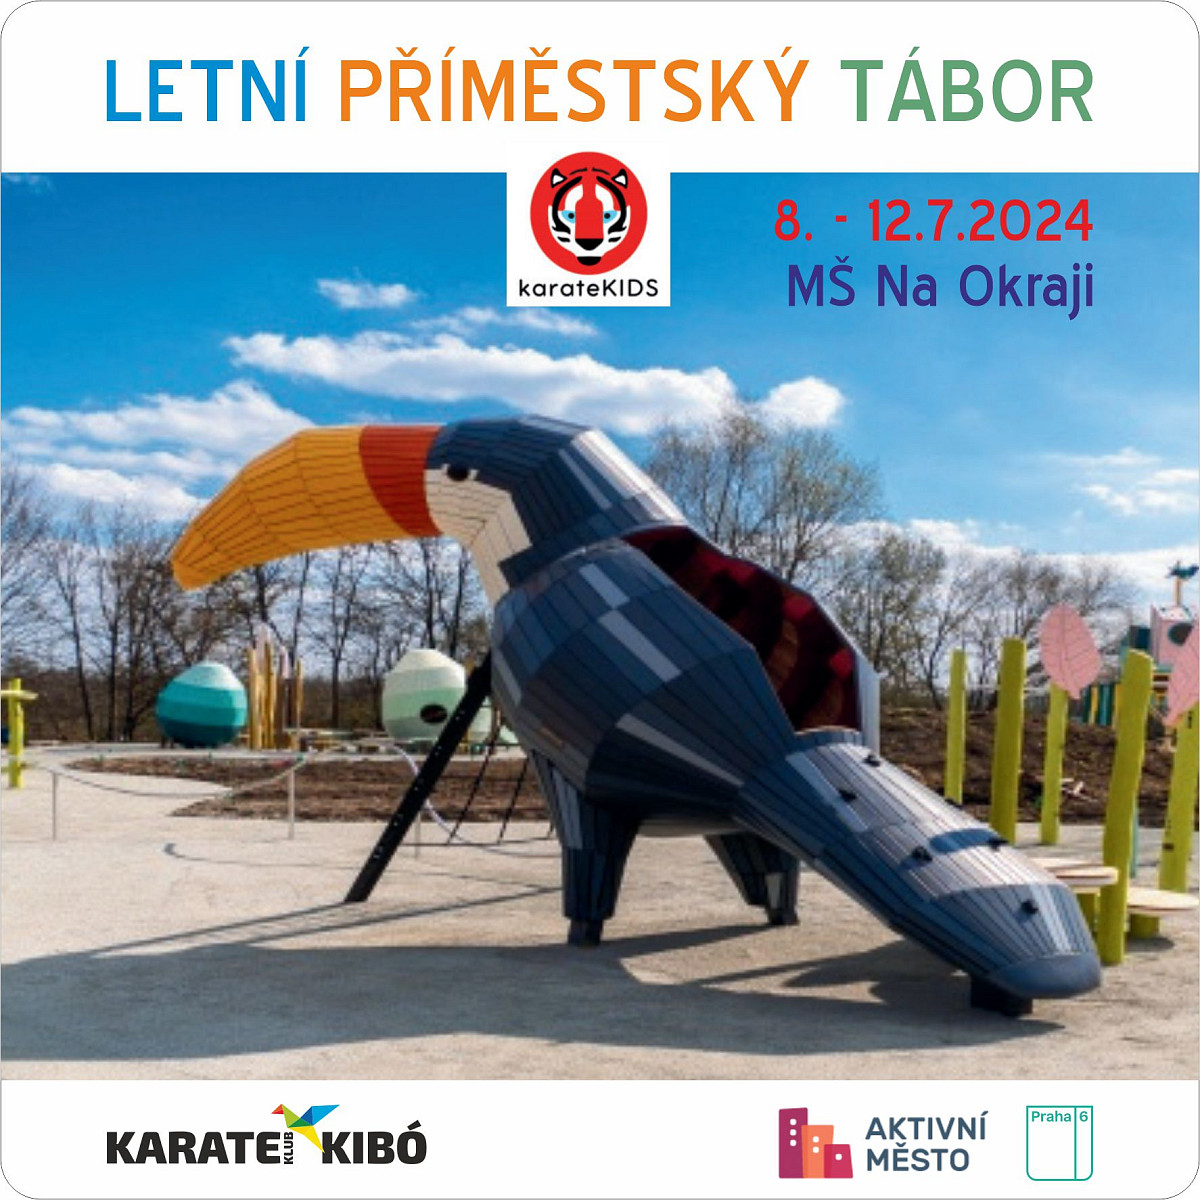 kkk-tabor-primestsky-2024-kids.jpg